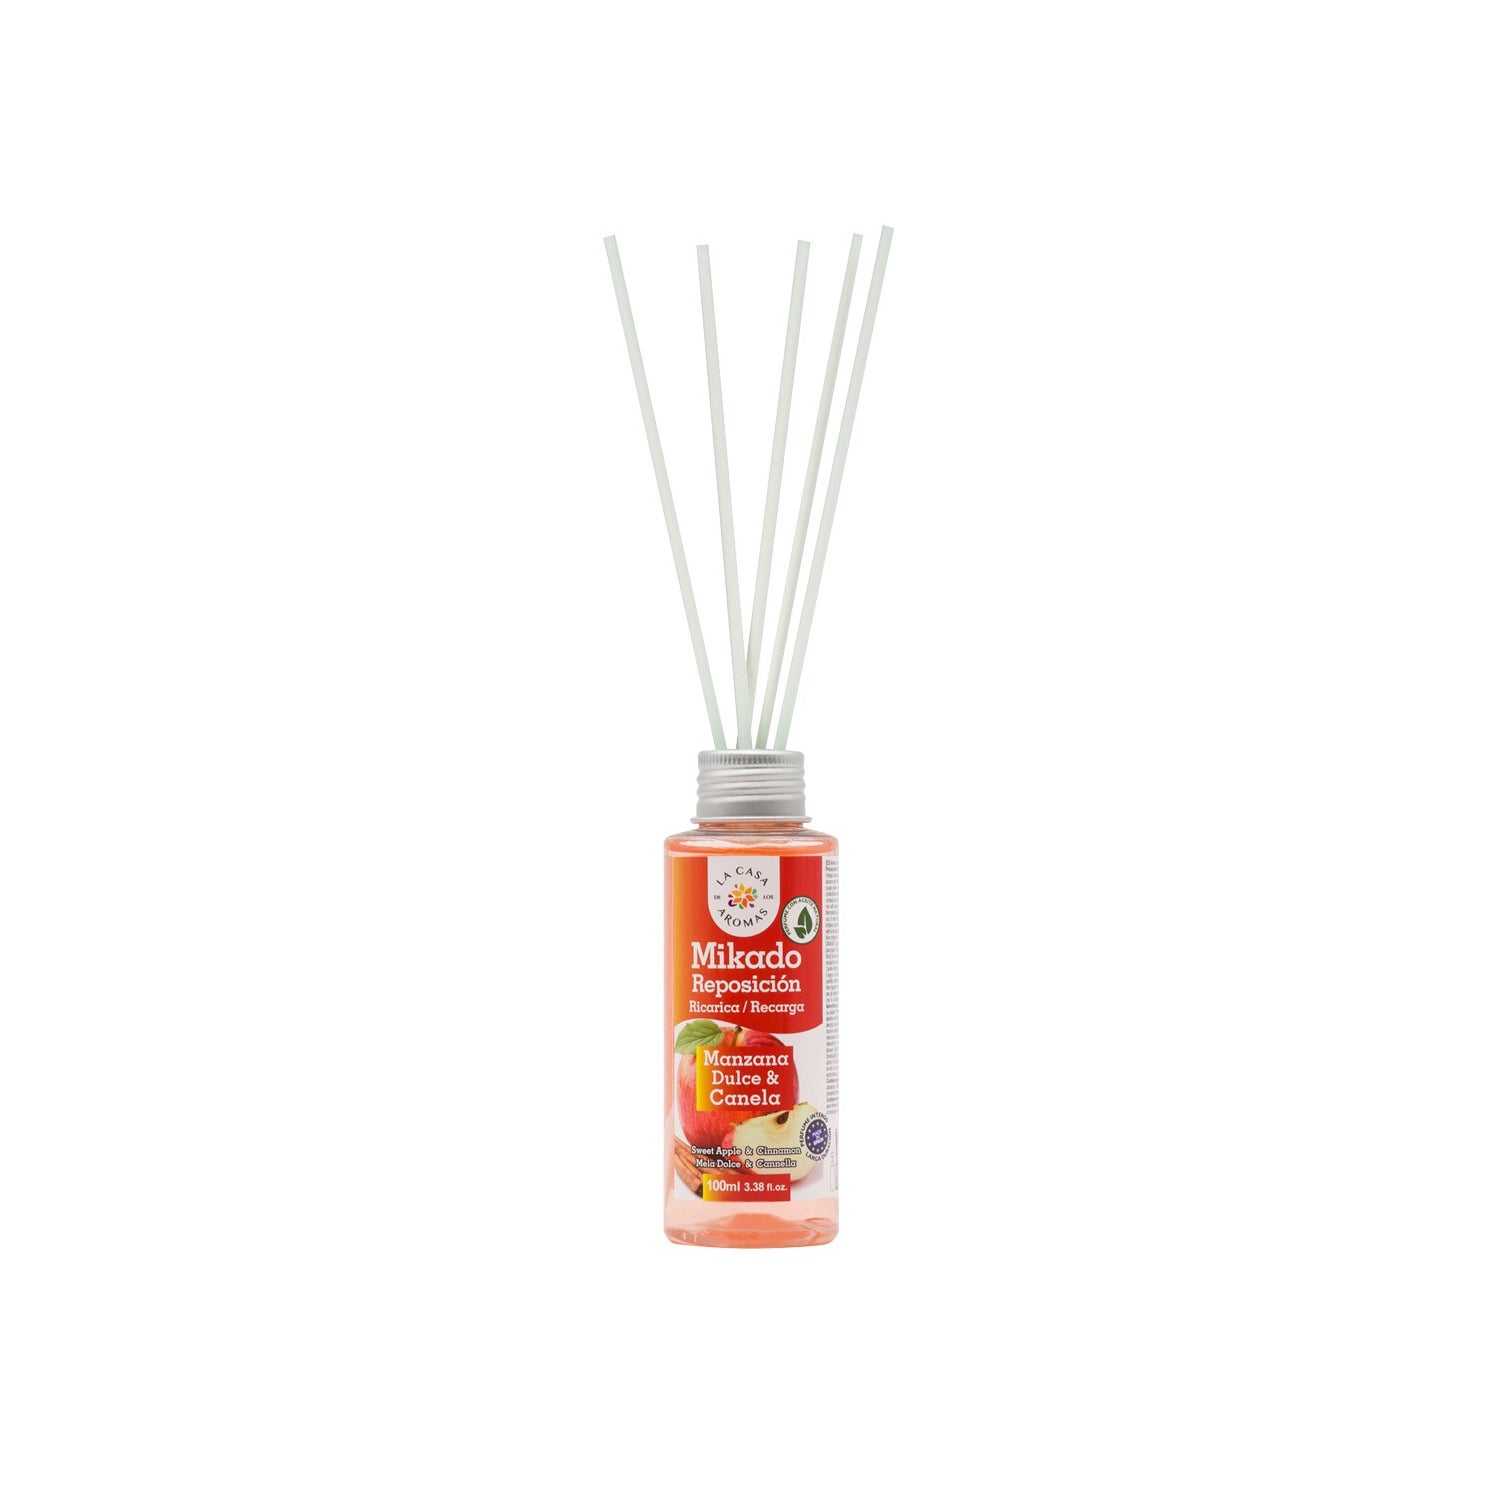 La Casa de los Aromas - Mikado air freshener 50ml - Cinnamon